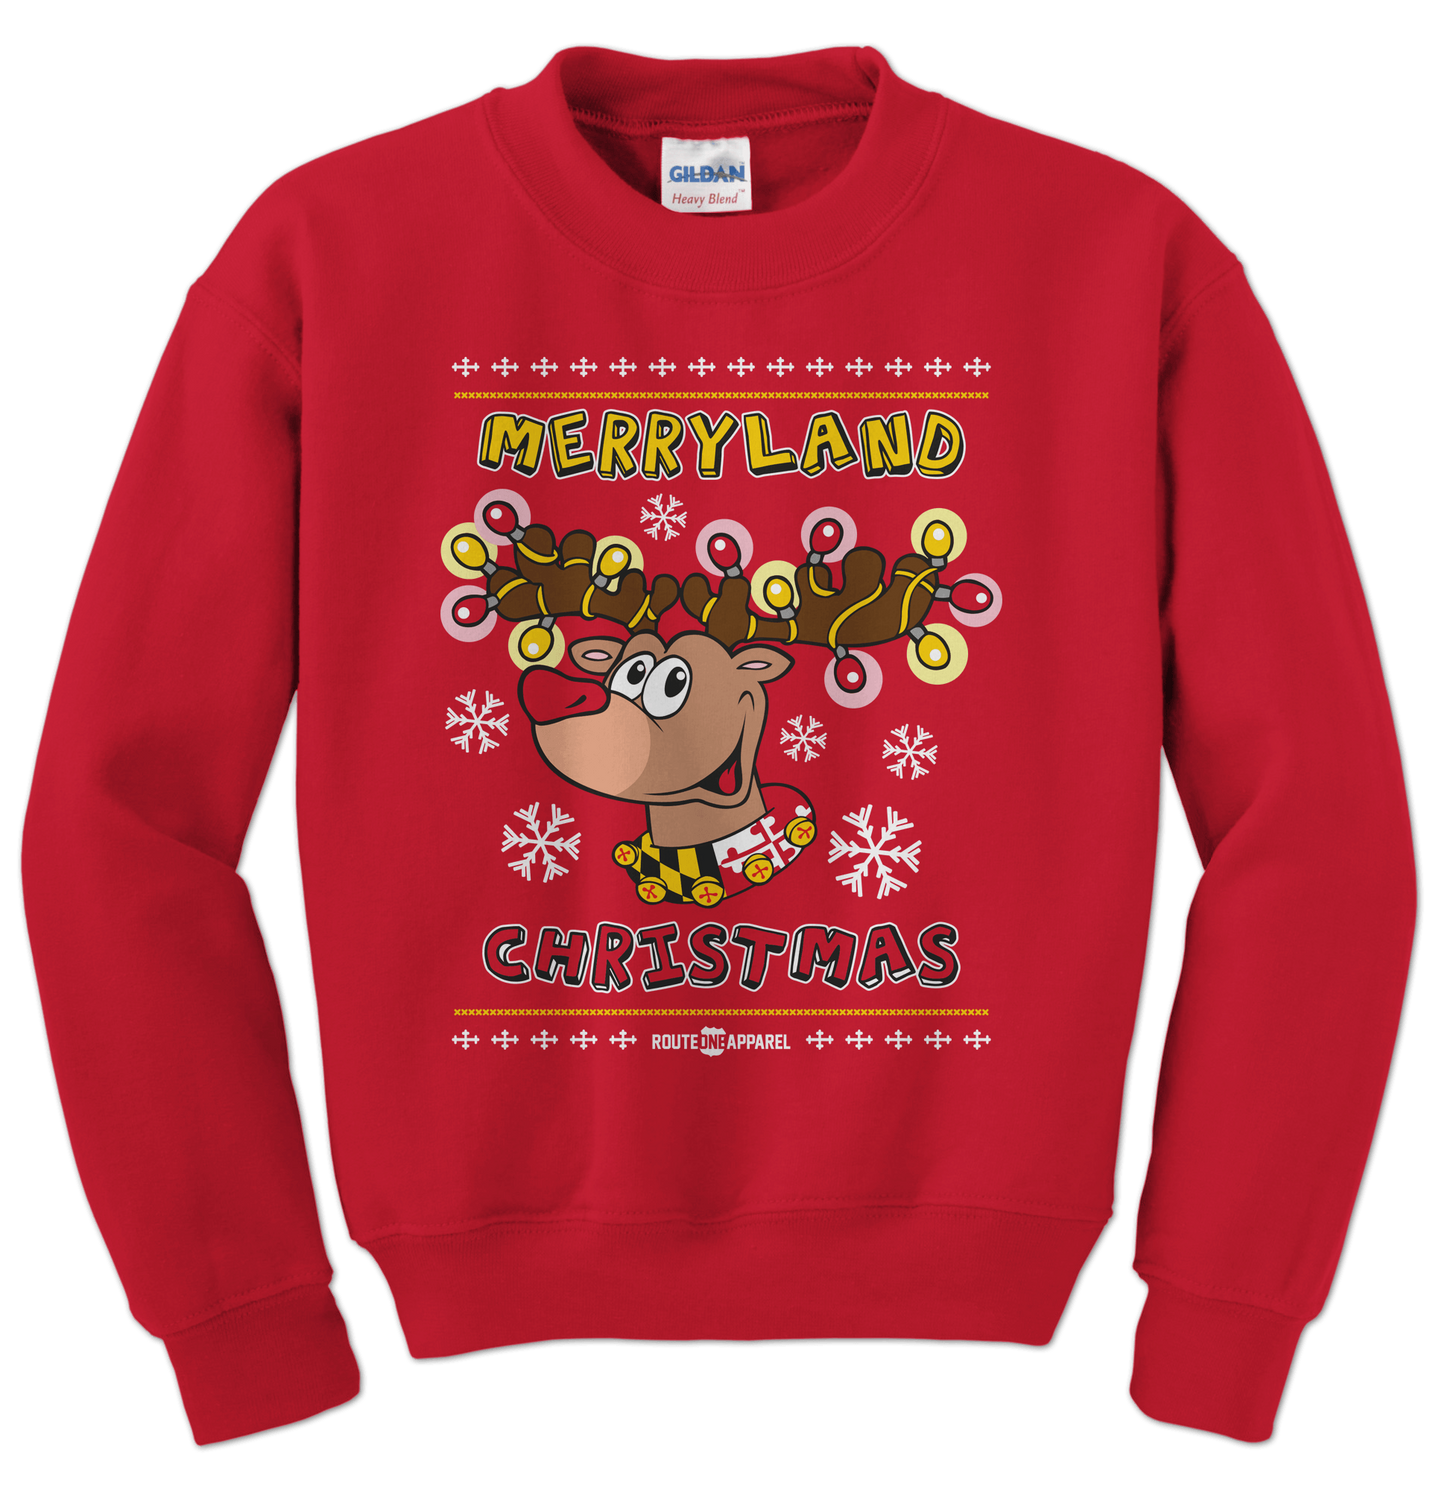 Merryland Christmas (Red) / Crew Sweatshirt - Route One Apparel